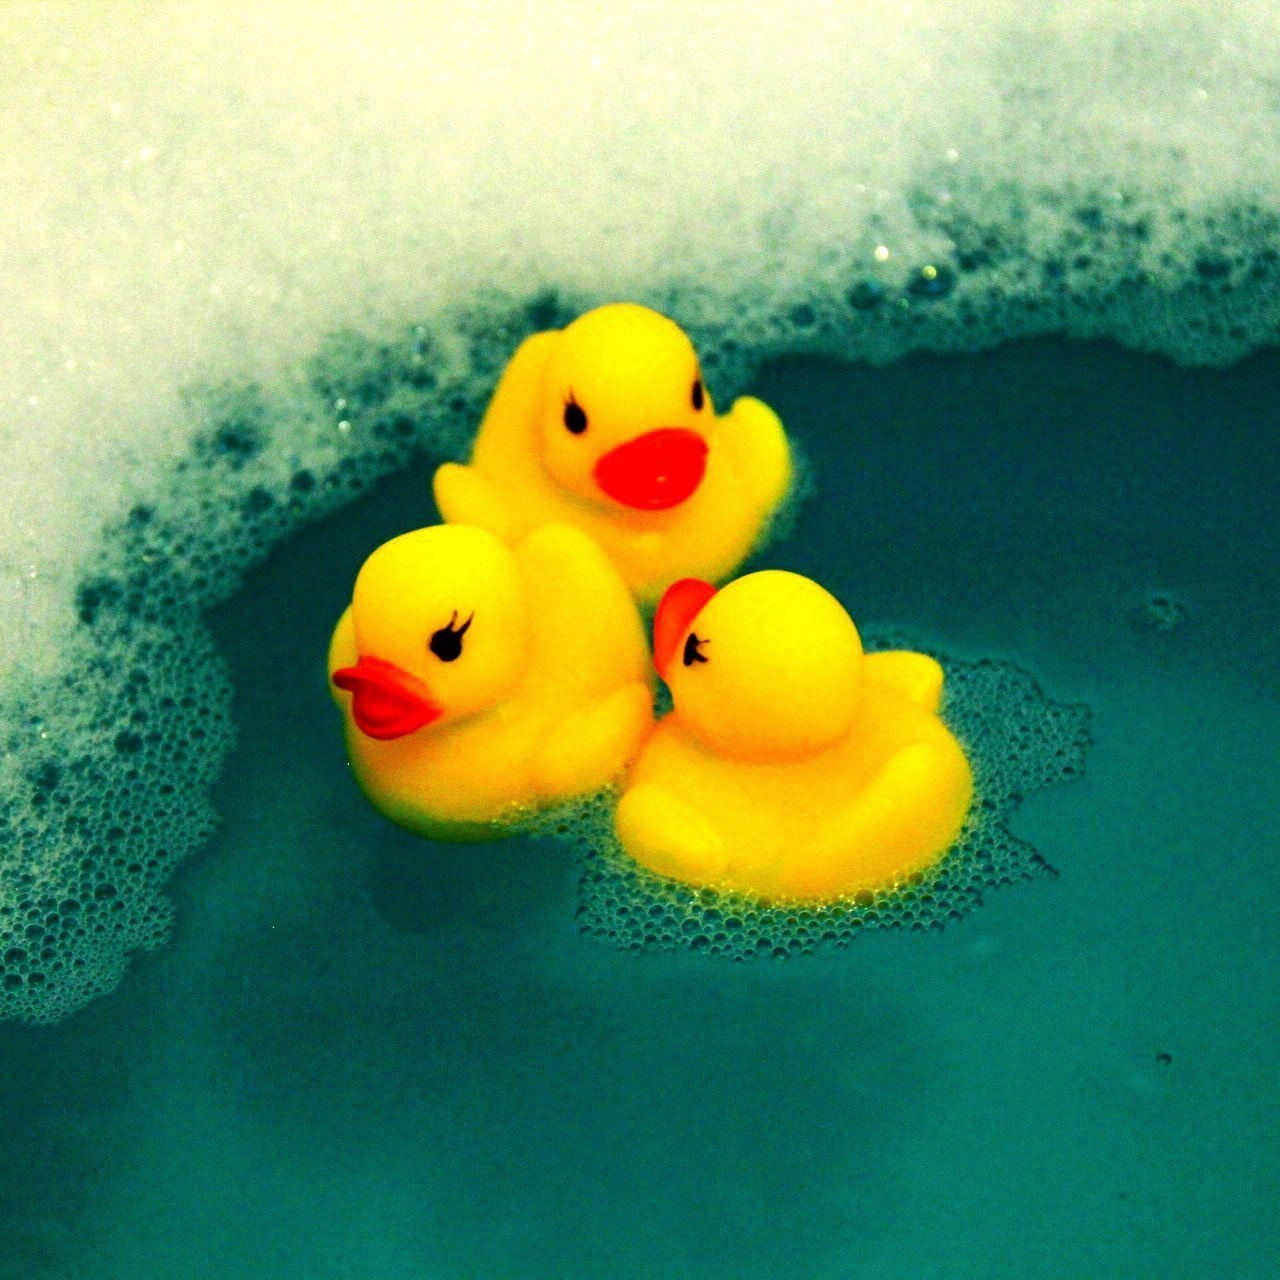 Rubber ducky in a bathtub